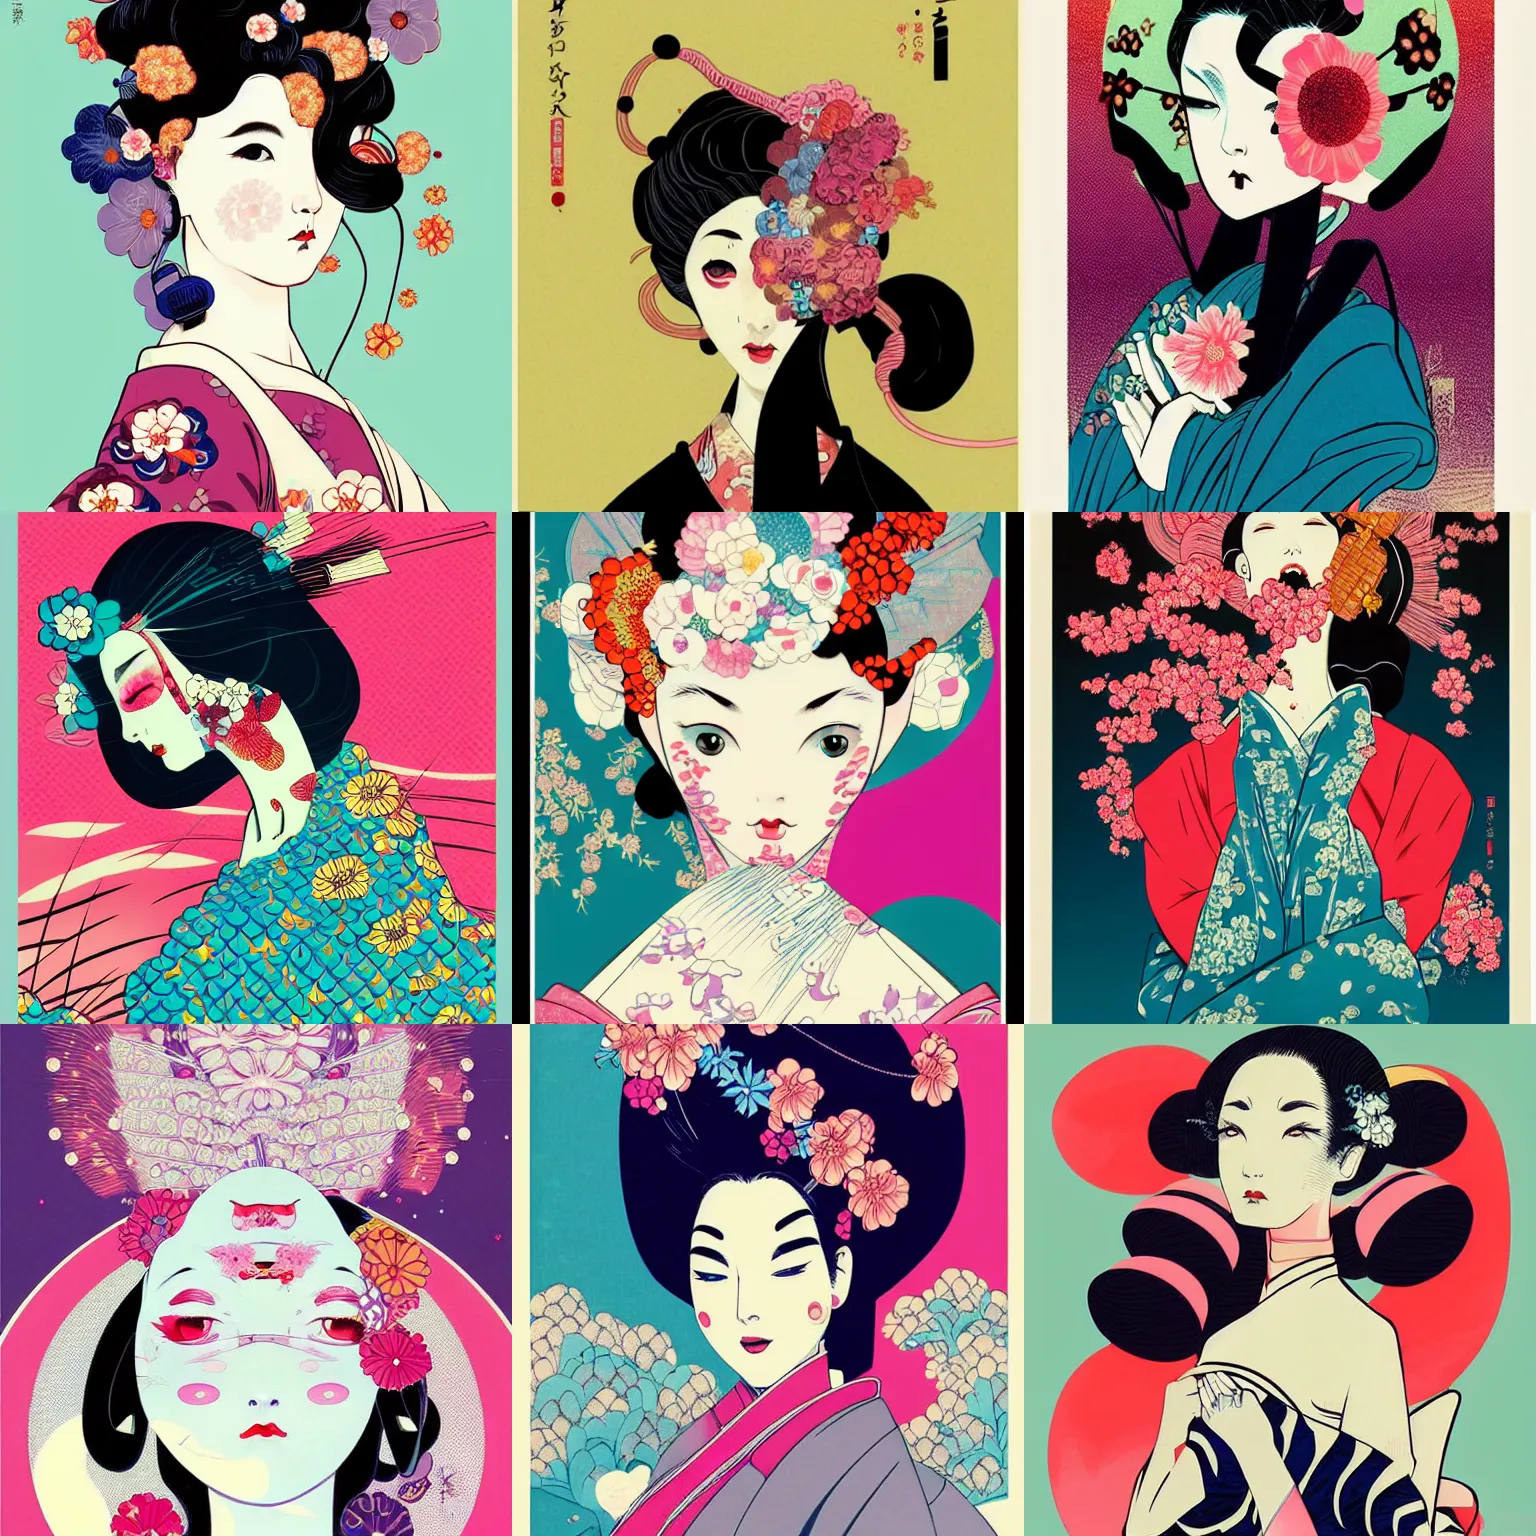 Prompt: beautiful vogue geisha by hokusai, hikari shimoda, victo ngai, classic shoujo, in the style of 6 0 s pop art, fantastic planet, minimalist poster art, pastel colors, gothic, retrofuturism, dmt art, icon, skull, artstation, artgerm